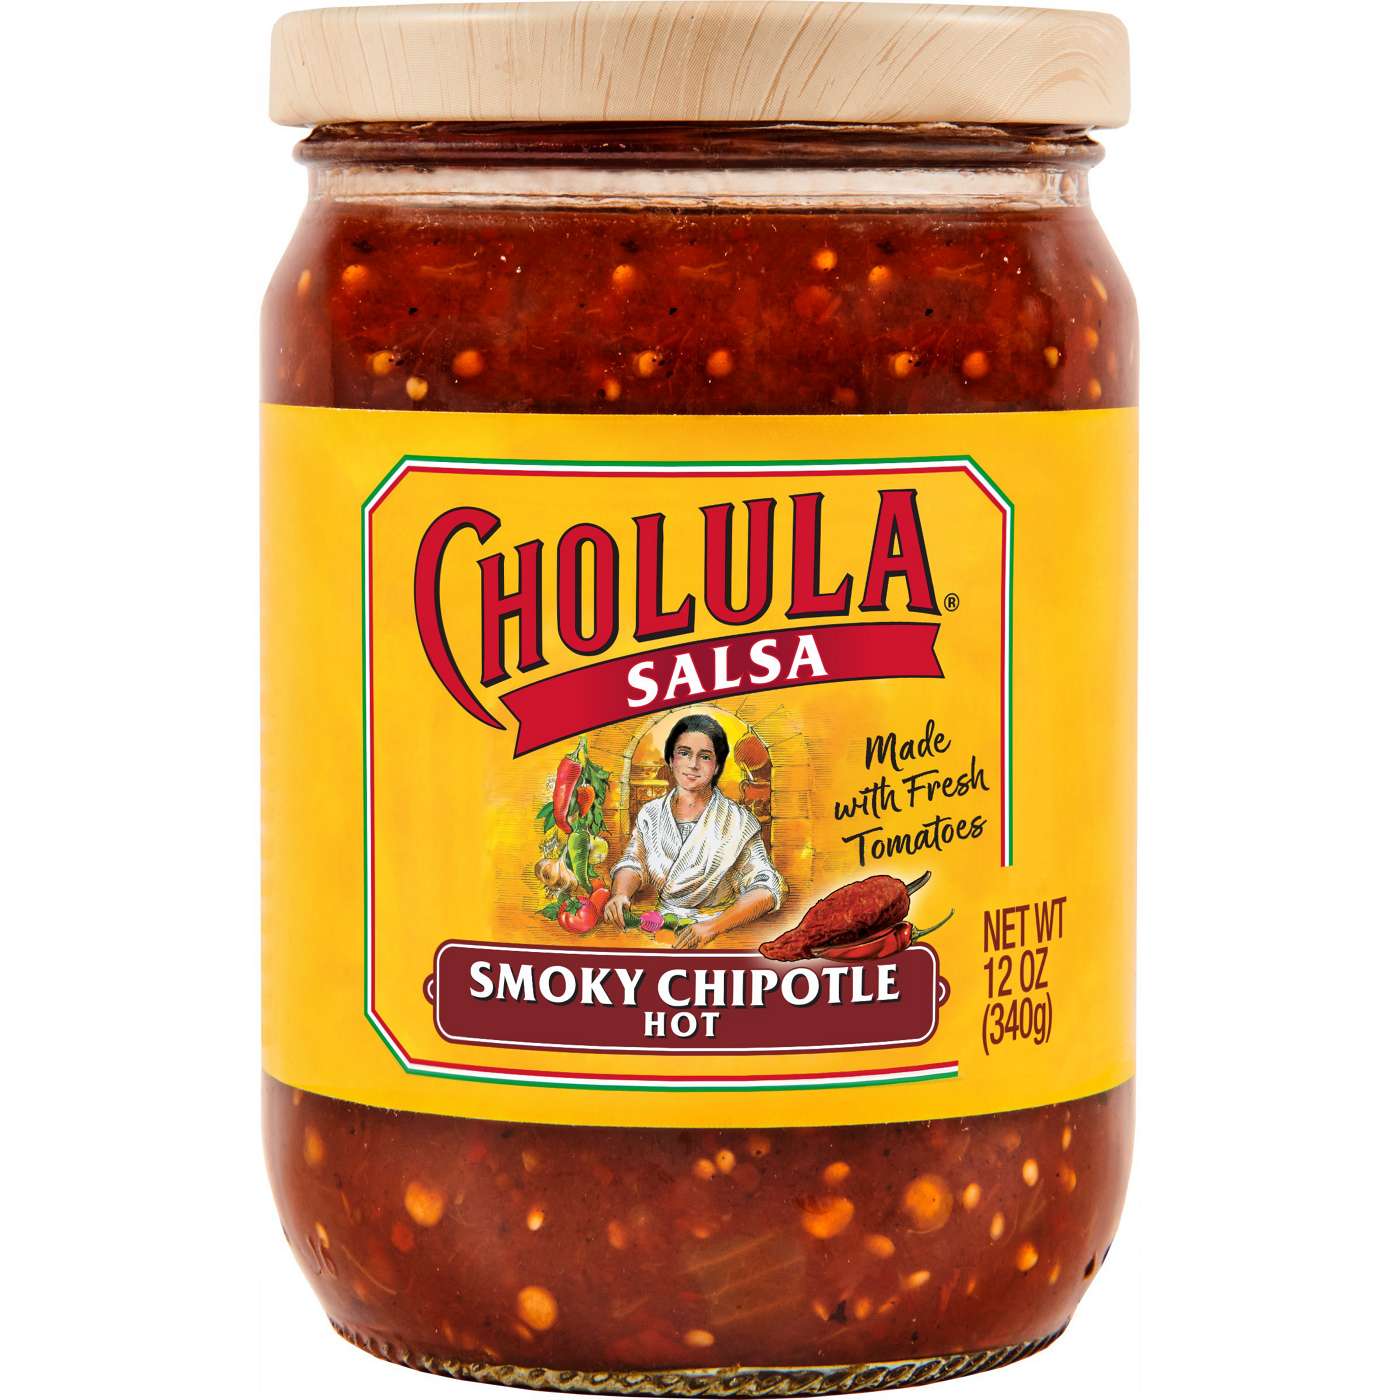 Cholula Smoky Chipotle - Hot Salsa; image 1 of 9